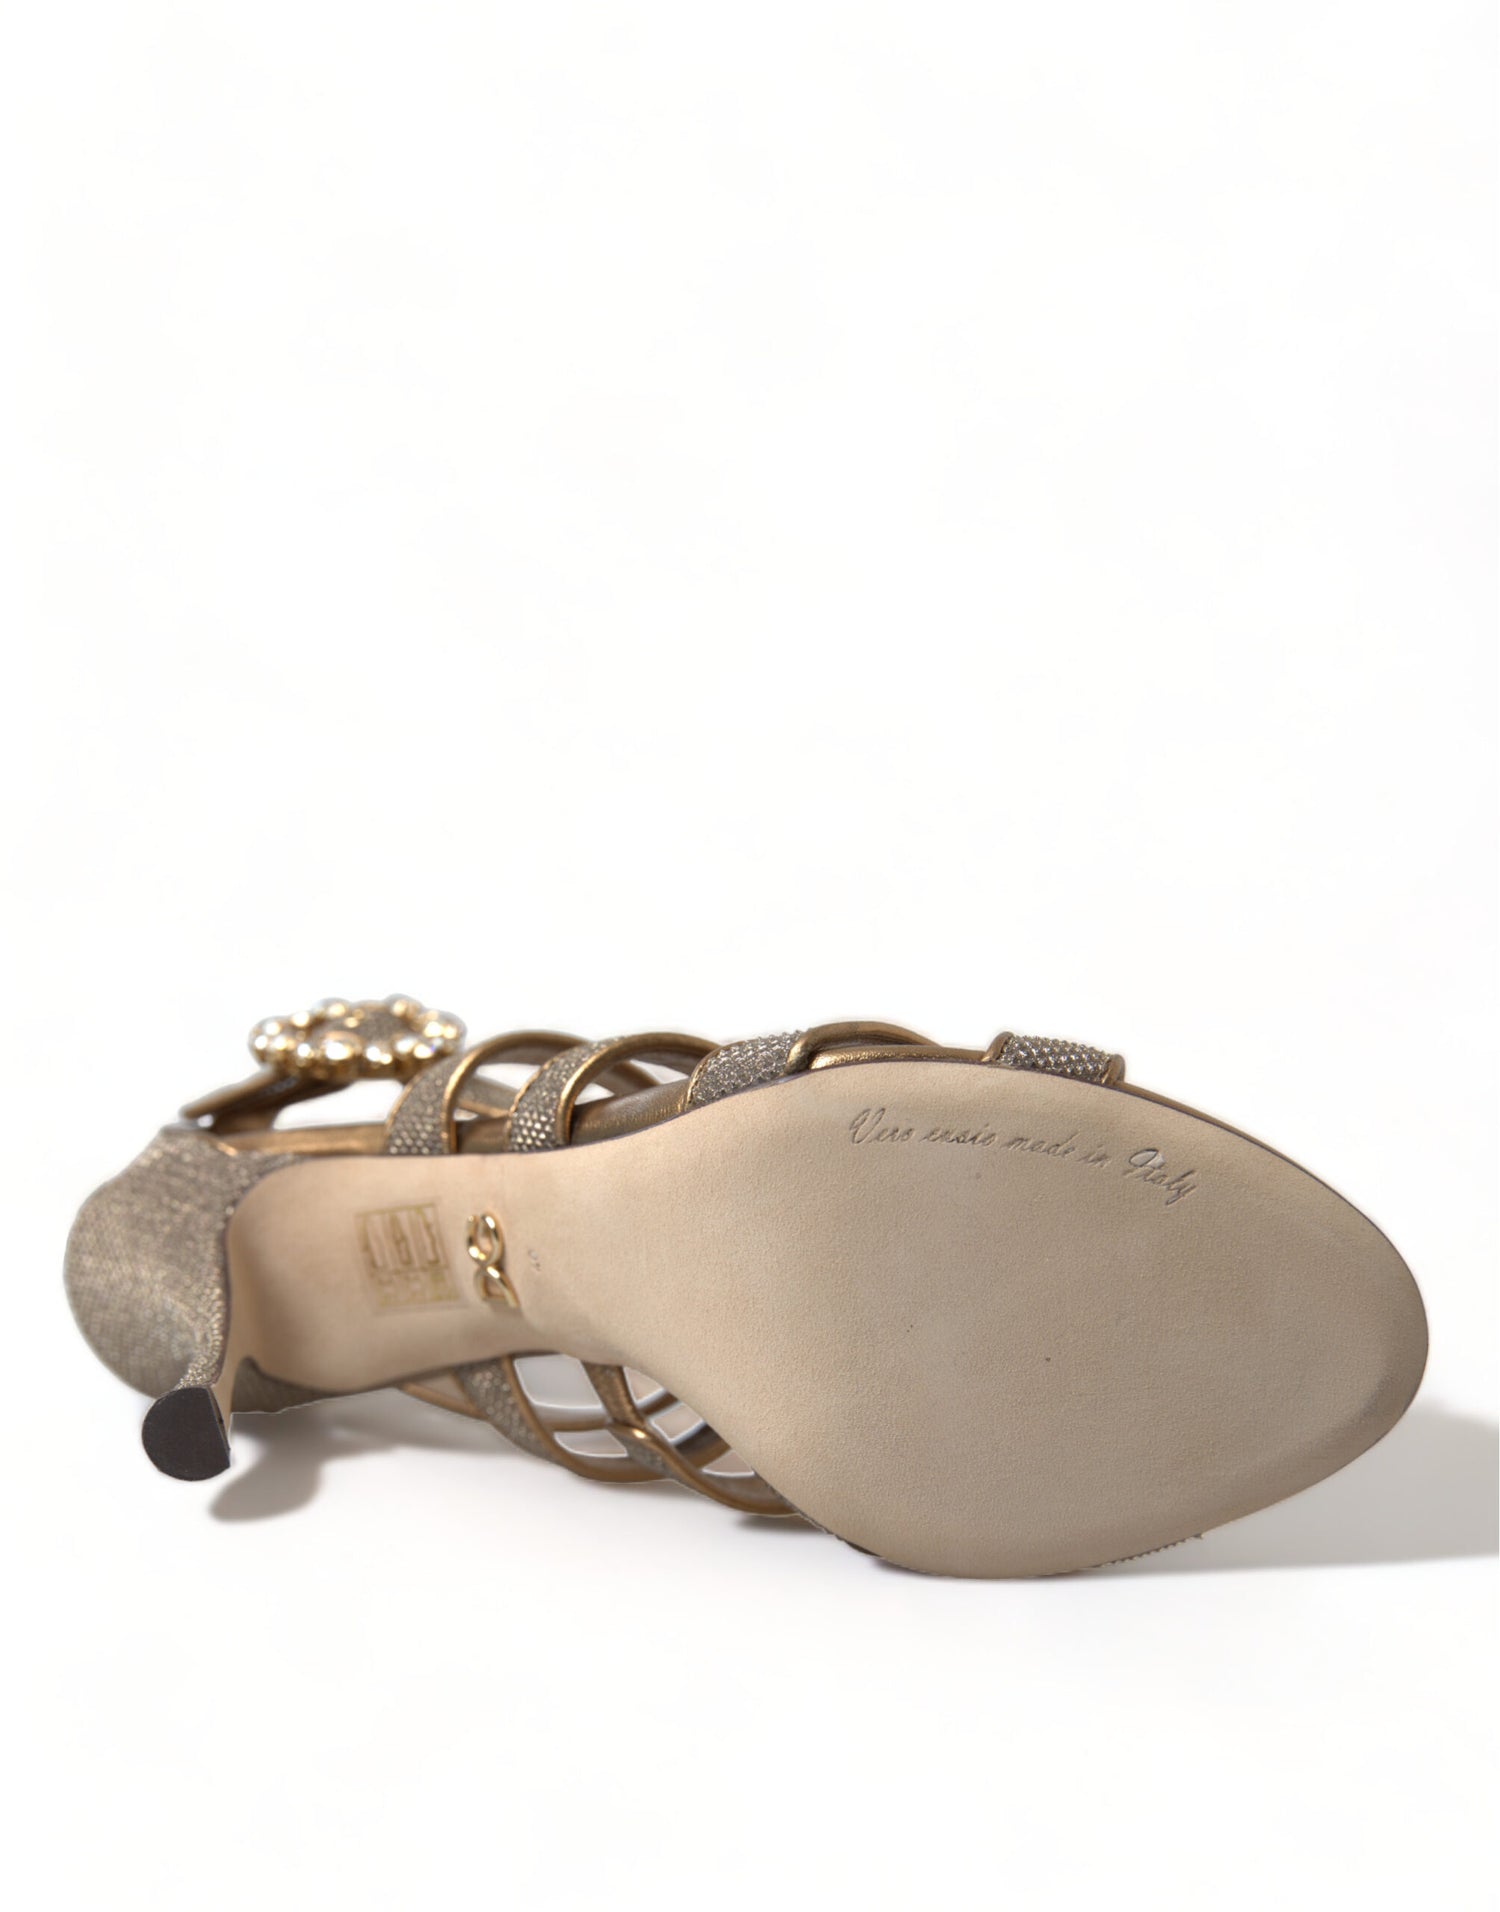 Dolce & Gabbana Bronze Crystal Strap Heels Sandals Shoes - DEA STILOSA MILANO